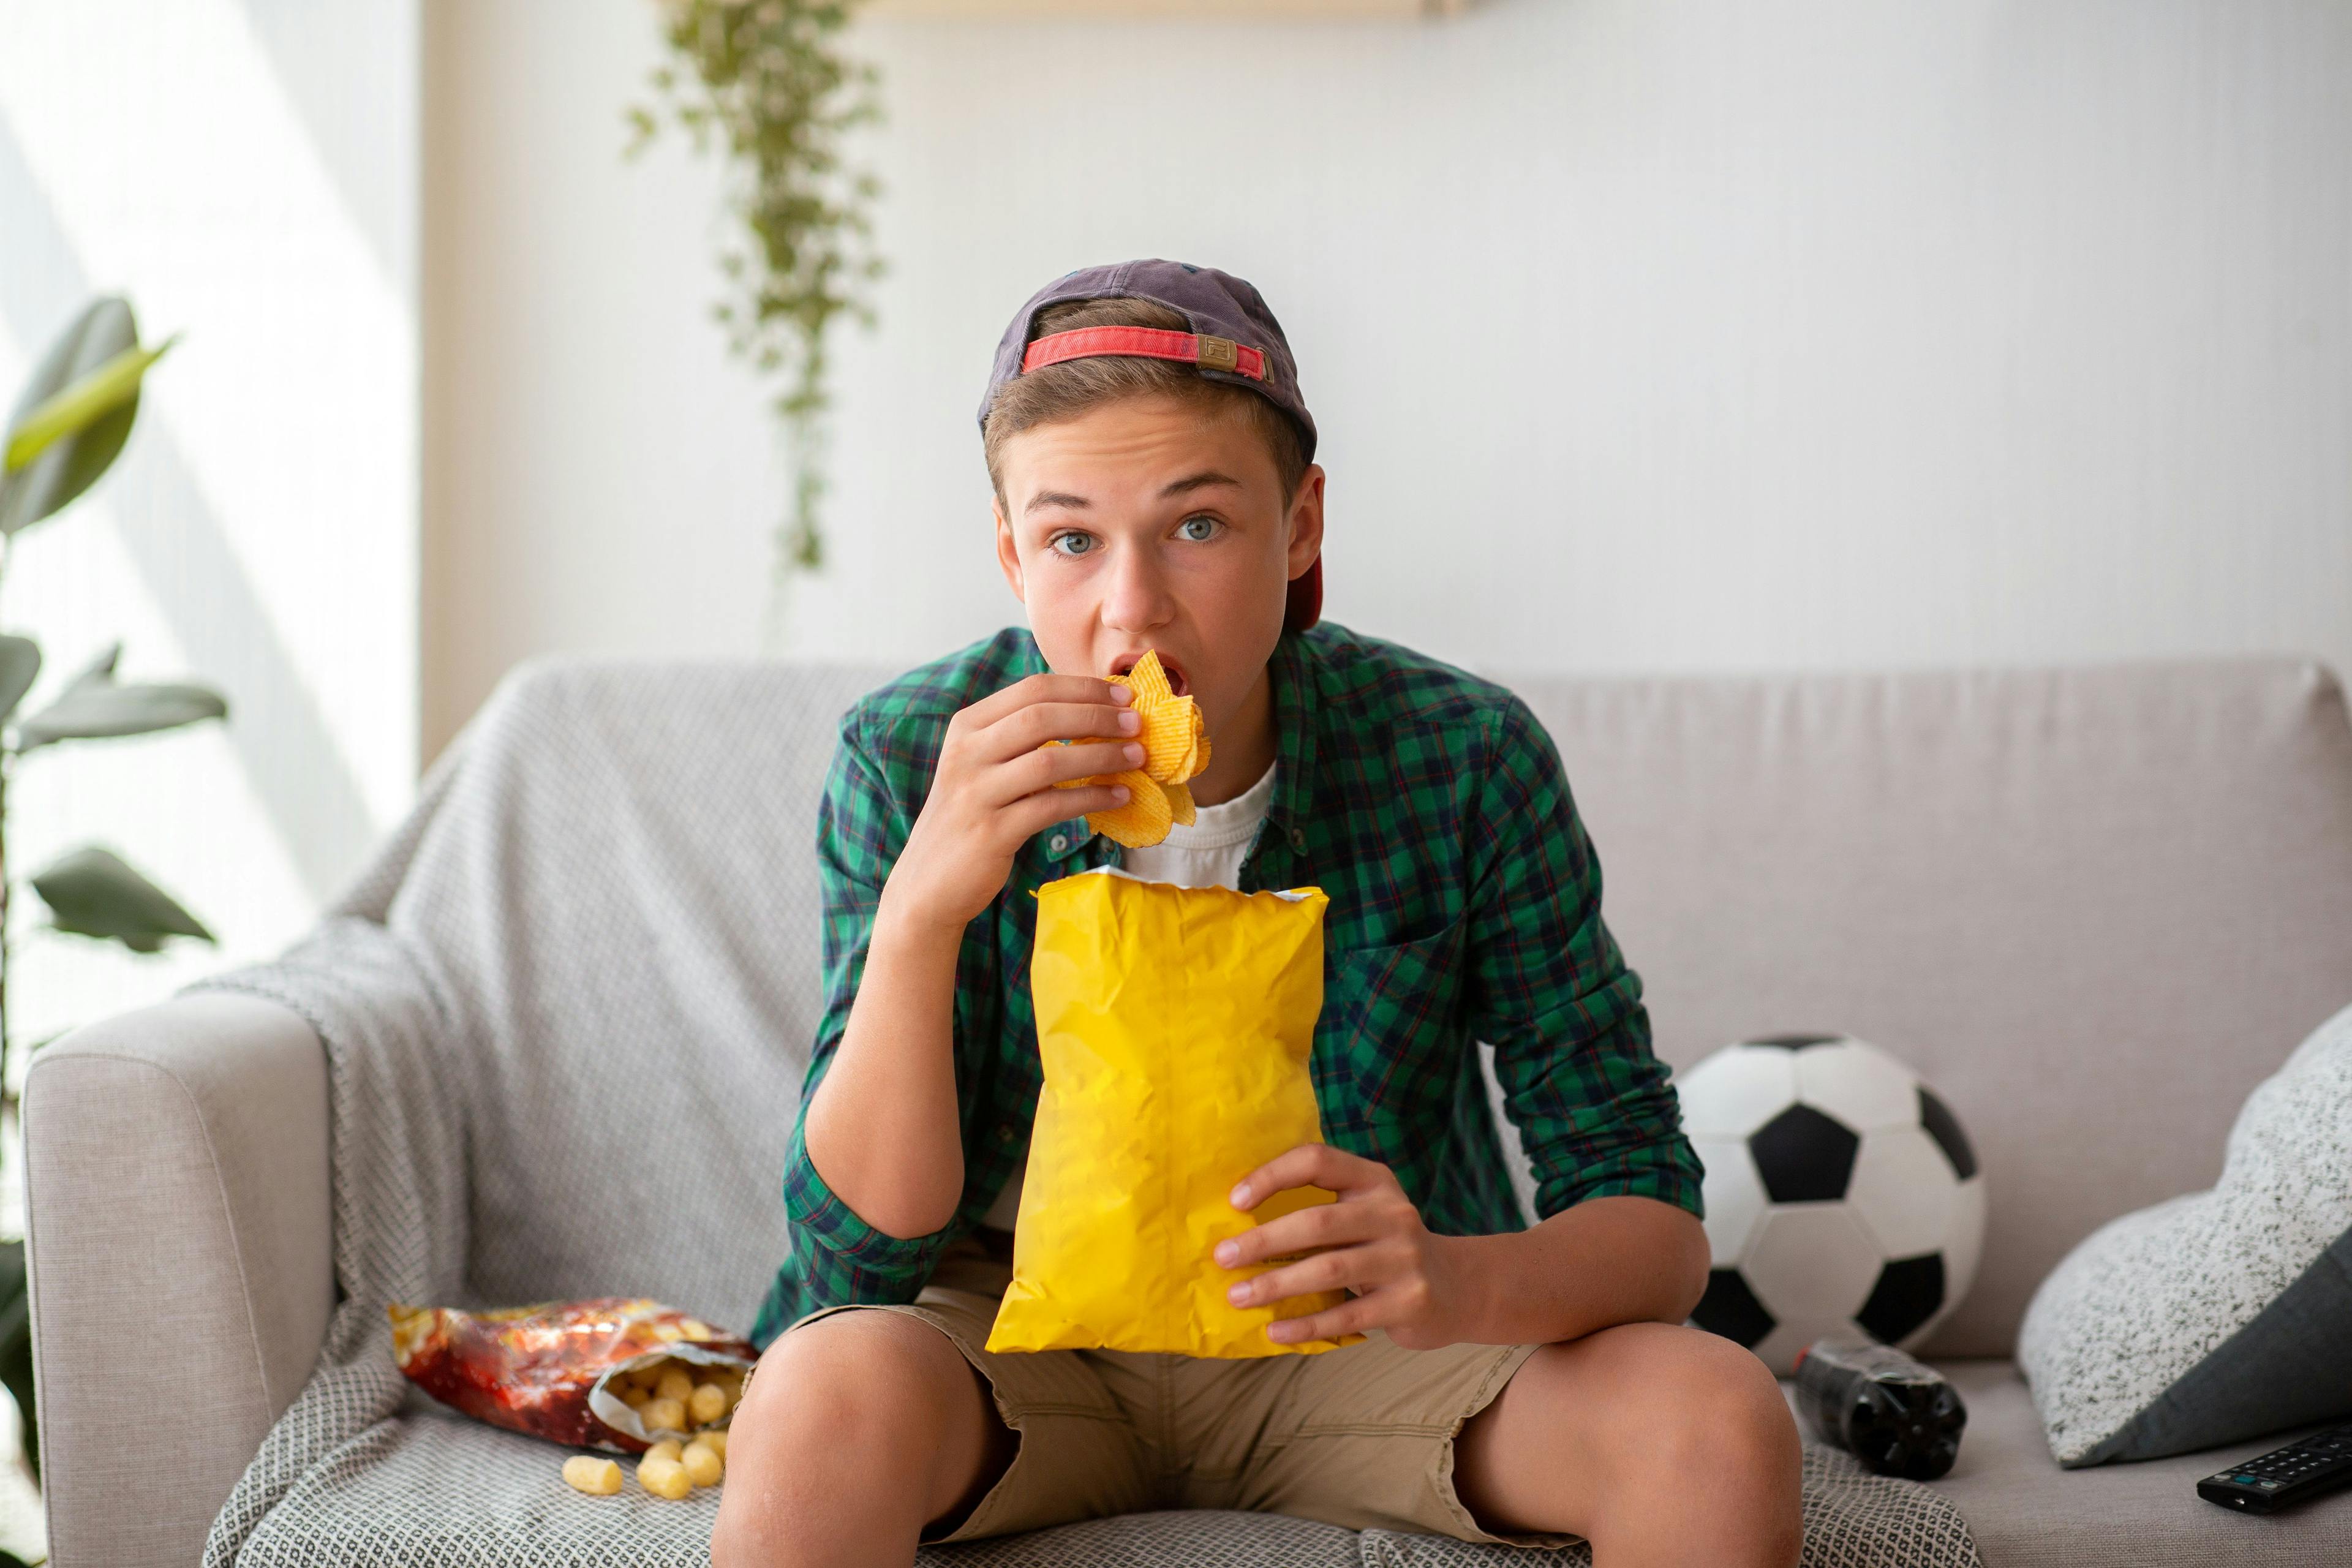 Teenager eating | Image Credit: © Prostock-studio - © Prostock-studio - stock.adobe.com.